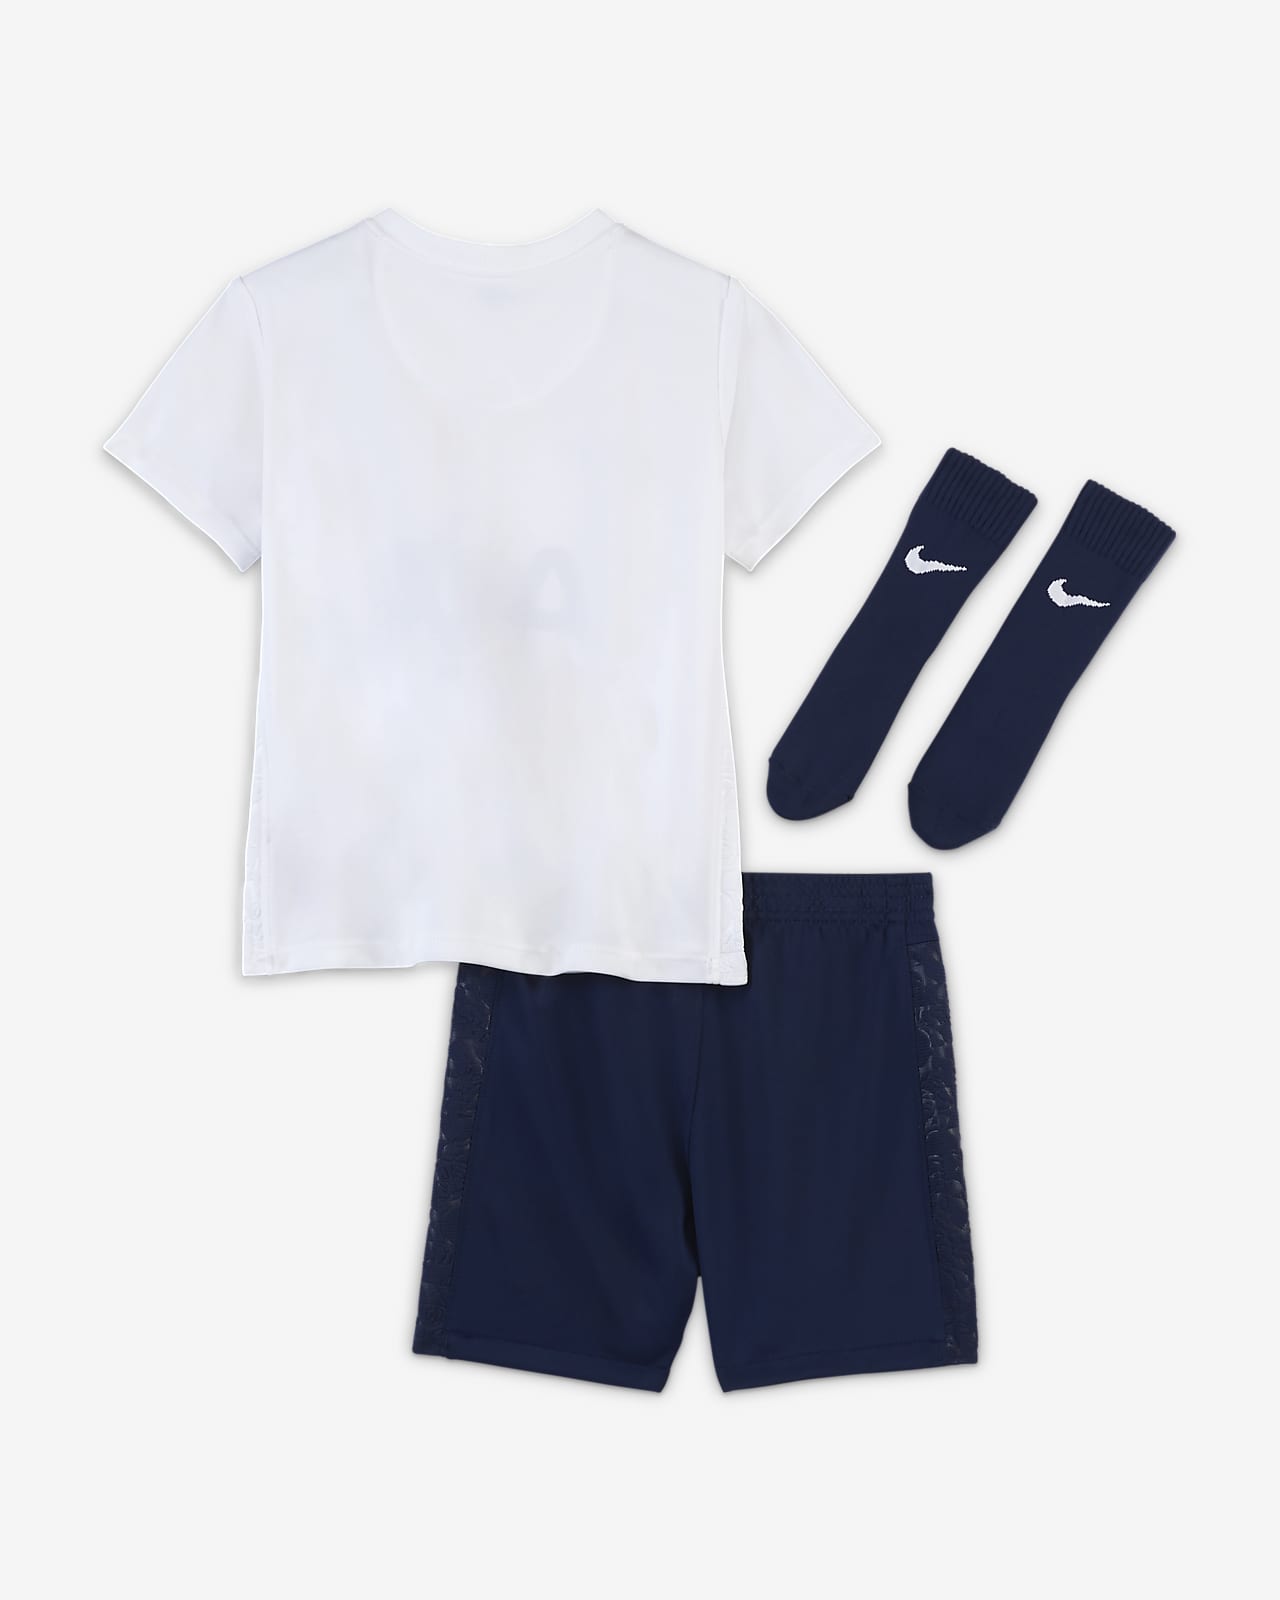 Tottenham Hotspur FC Official Soccer Gift Boys Kids Baby Pajamas 